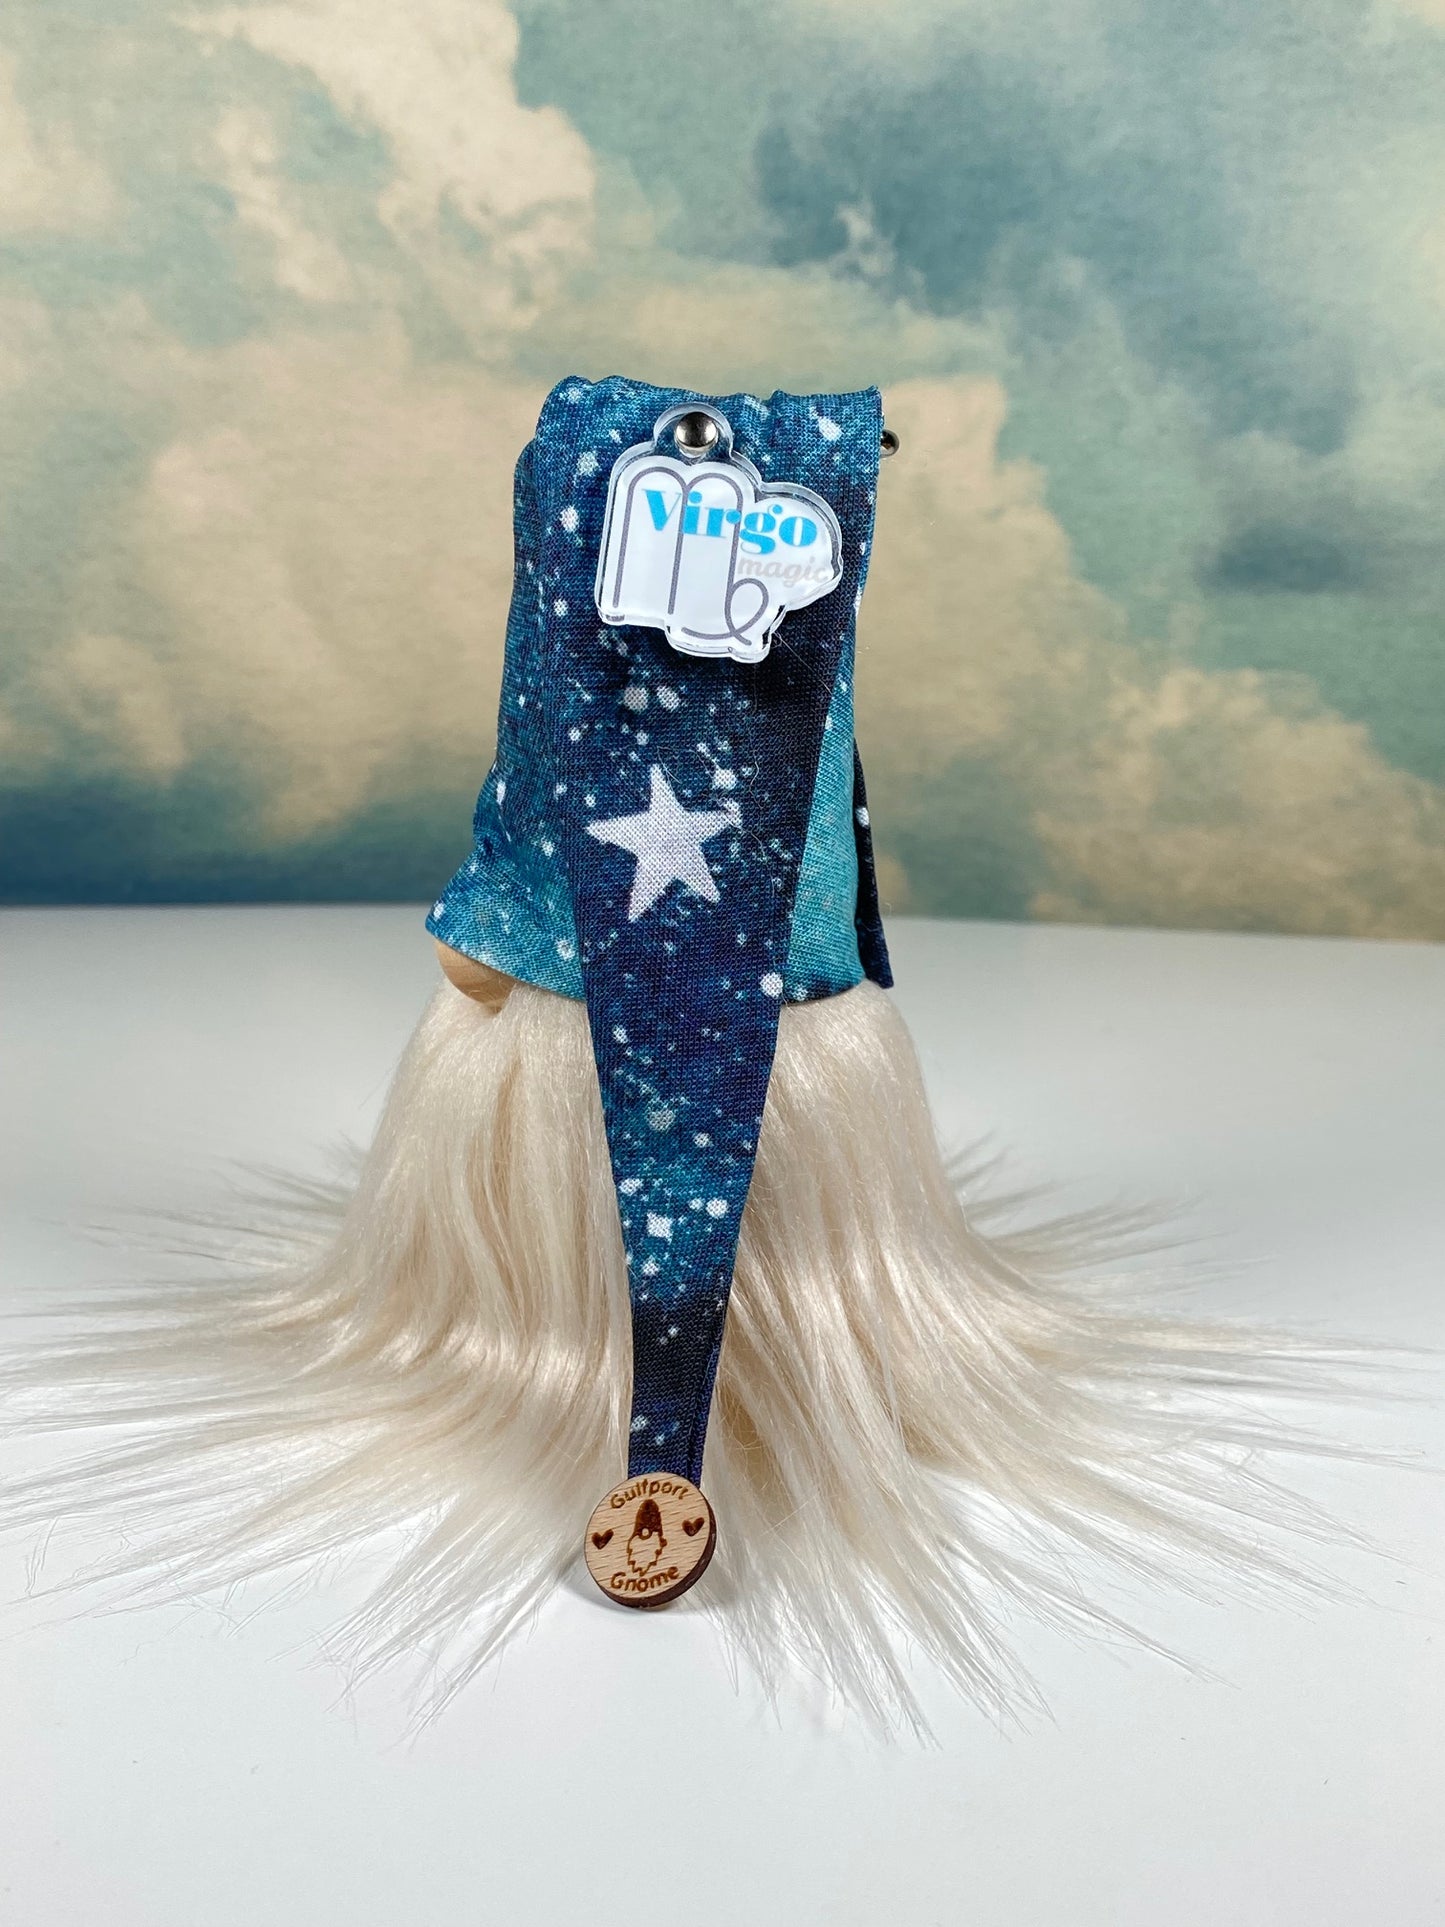 Gulfport Gnome™ - VIRGO Zodiac Sign Gnome- 4" Plush Mini Astrological Decor- Aug 23-Sep 22